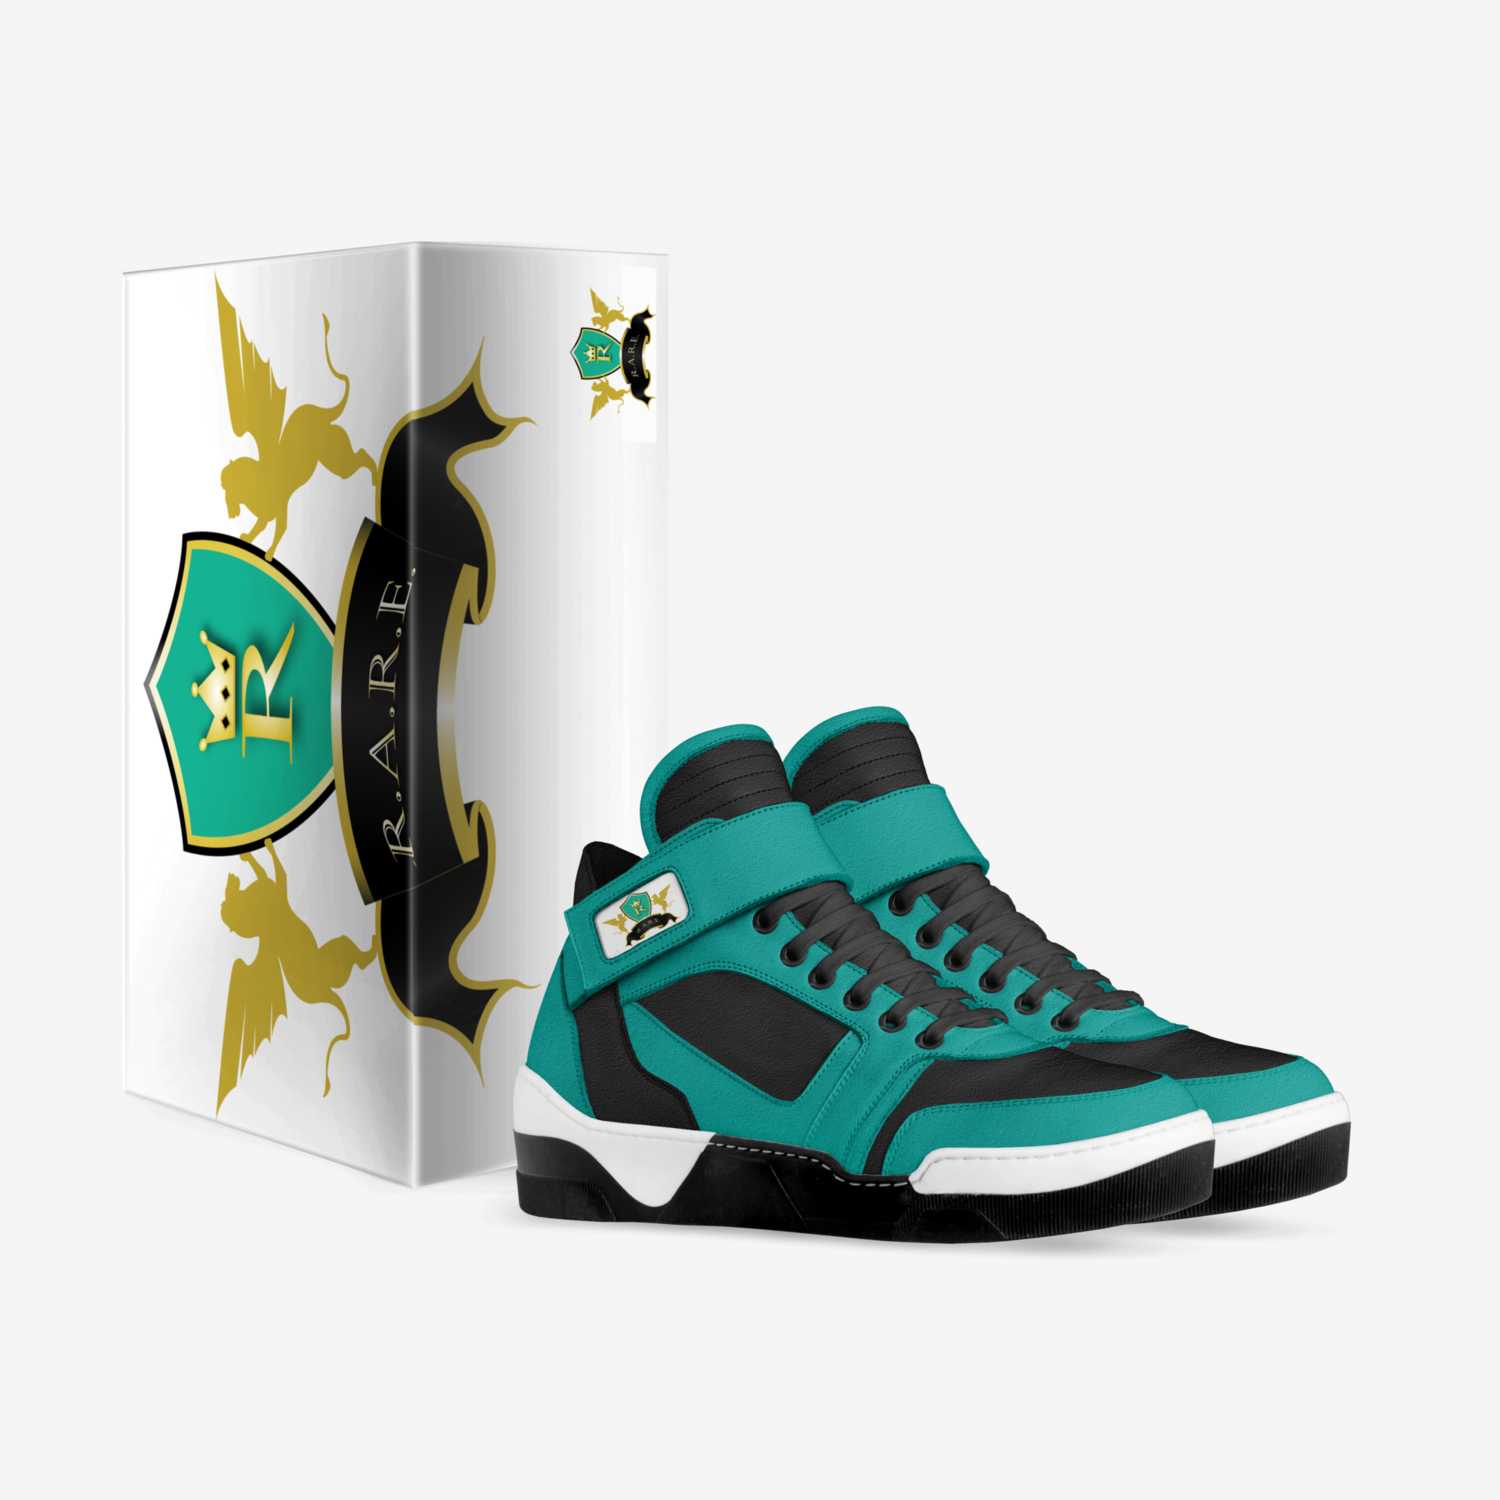 JADE custom made in Italy shoes by John A. Annan | Box view